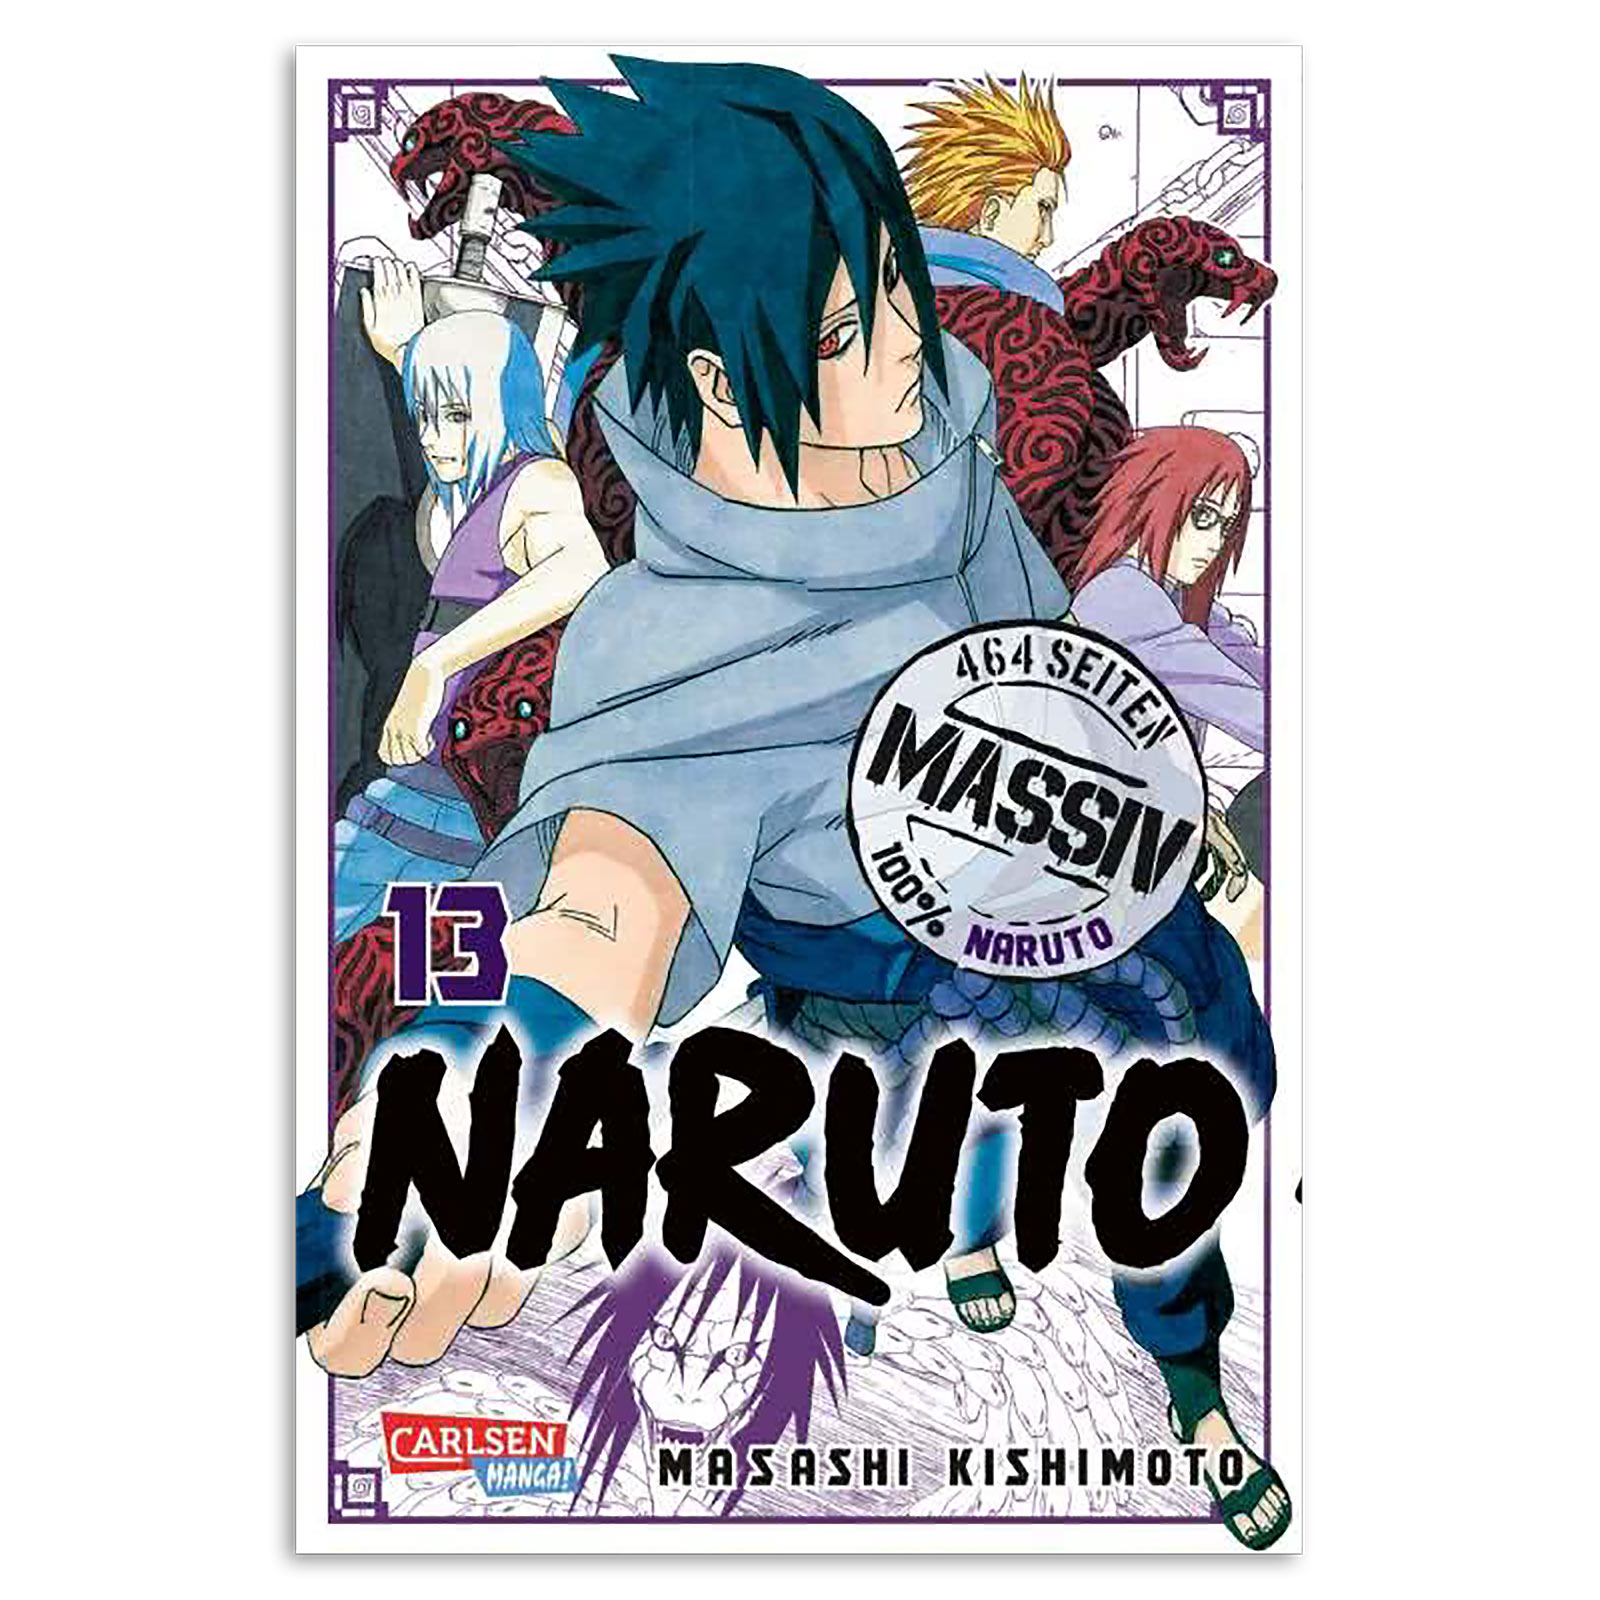 Naruto - Collection Volume 13 Paperback